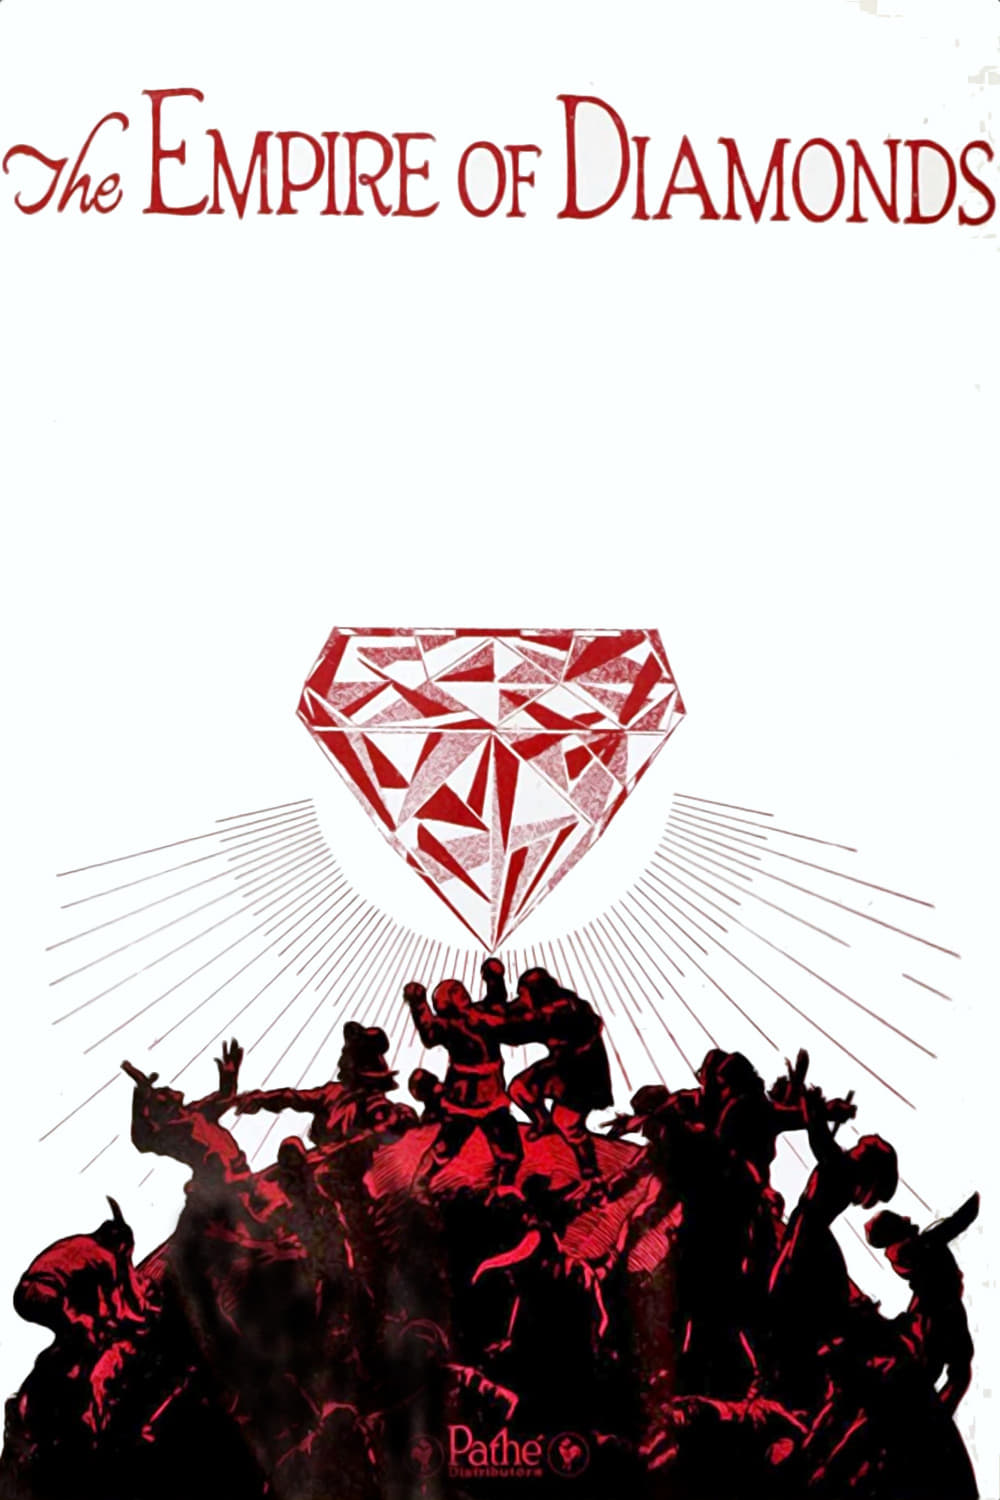 The Empire of Diamonds